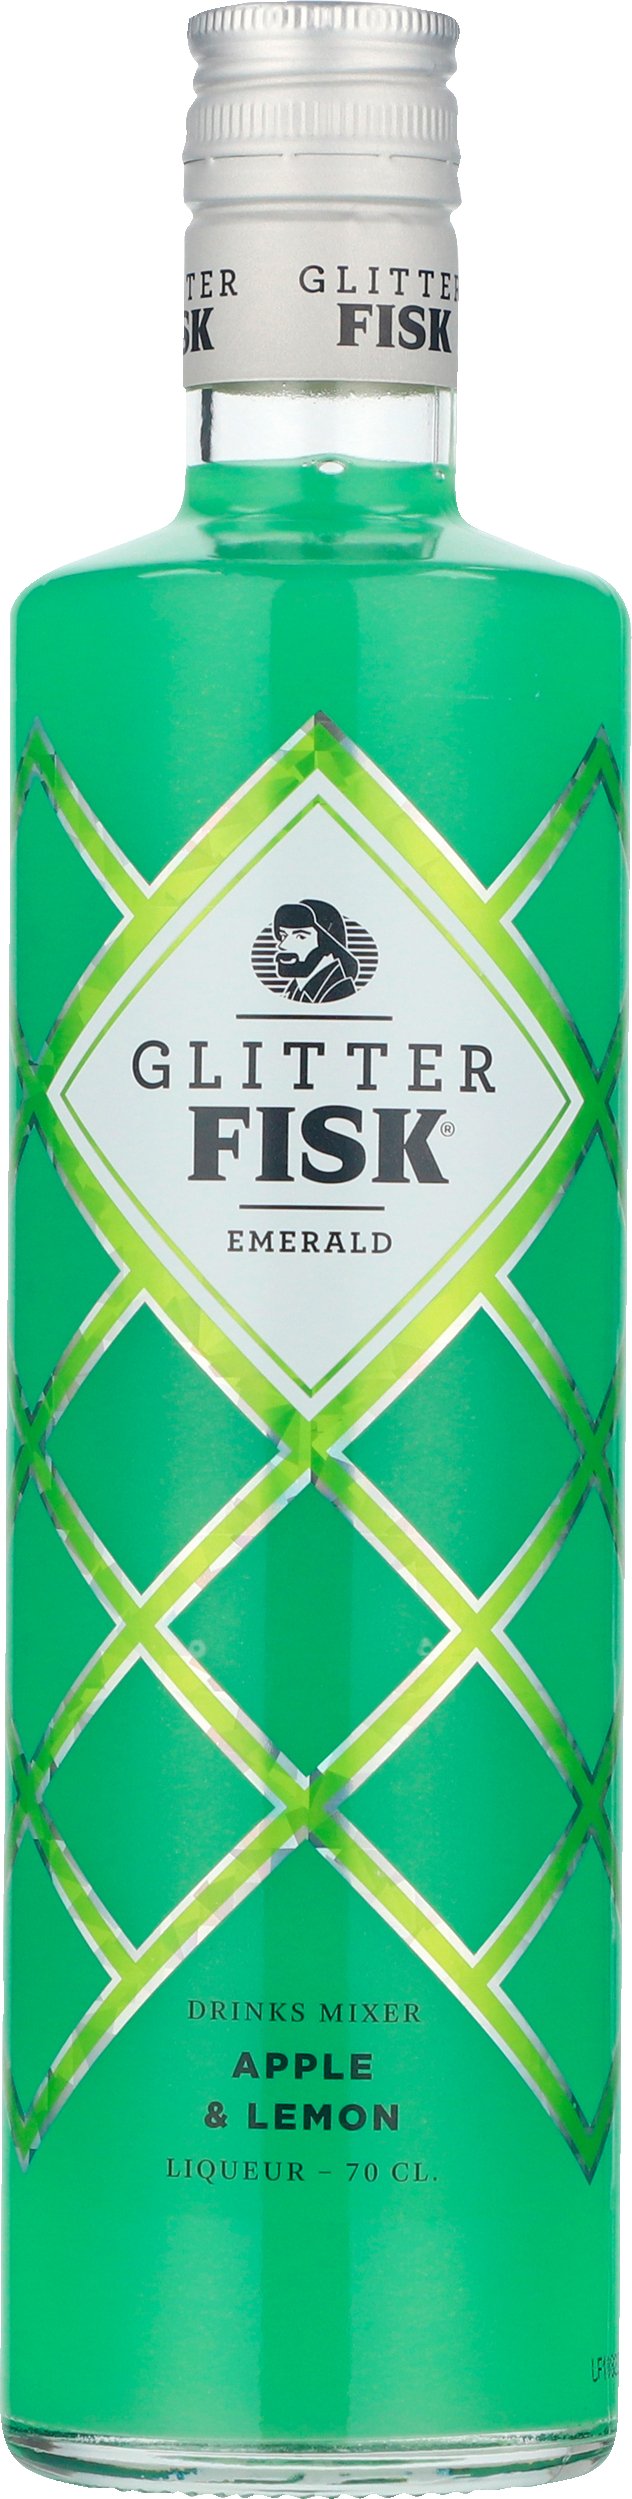 Glitter Fisk Emerald Likør Æble & Lemon 70 cl. - 15% - LIKØR - MED .DK